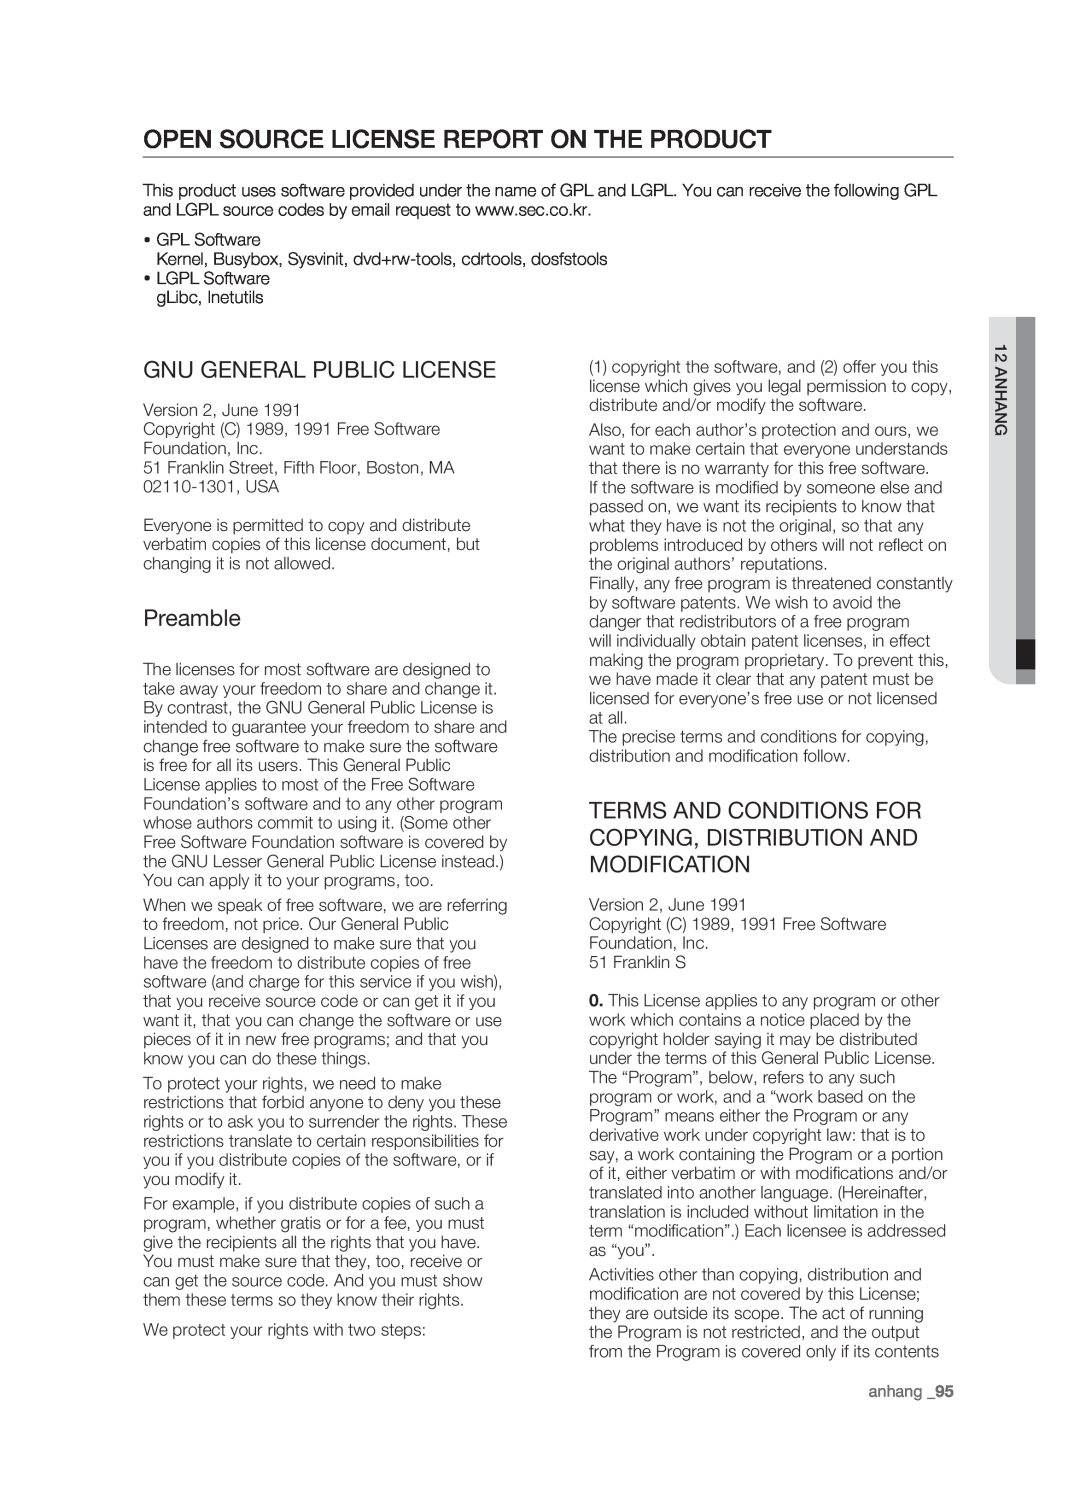 Samsung SHR-5080P, SHR-5082P/XEG, SHR-5160P Open Source License Report On The Product, Gnu General Public License, Preamble 